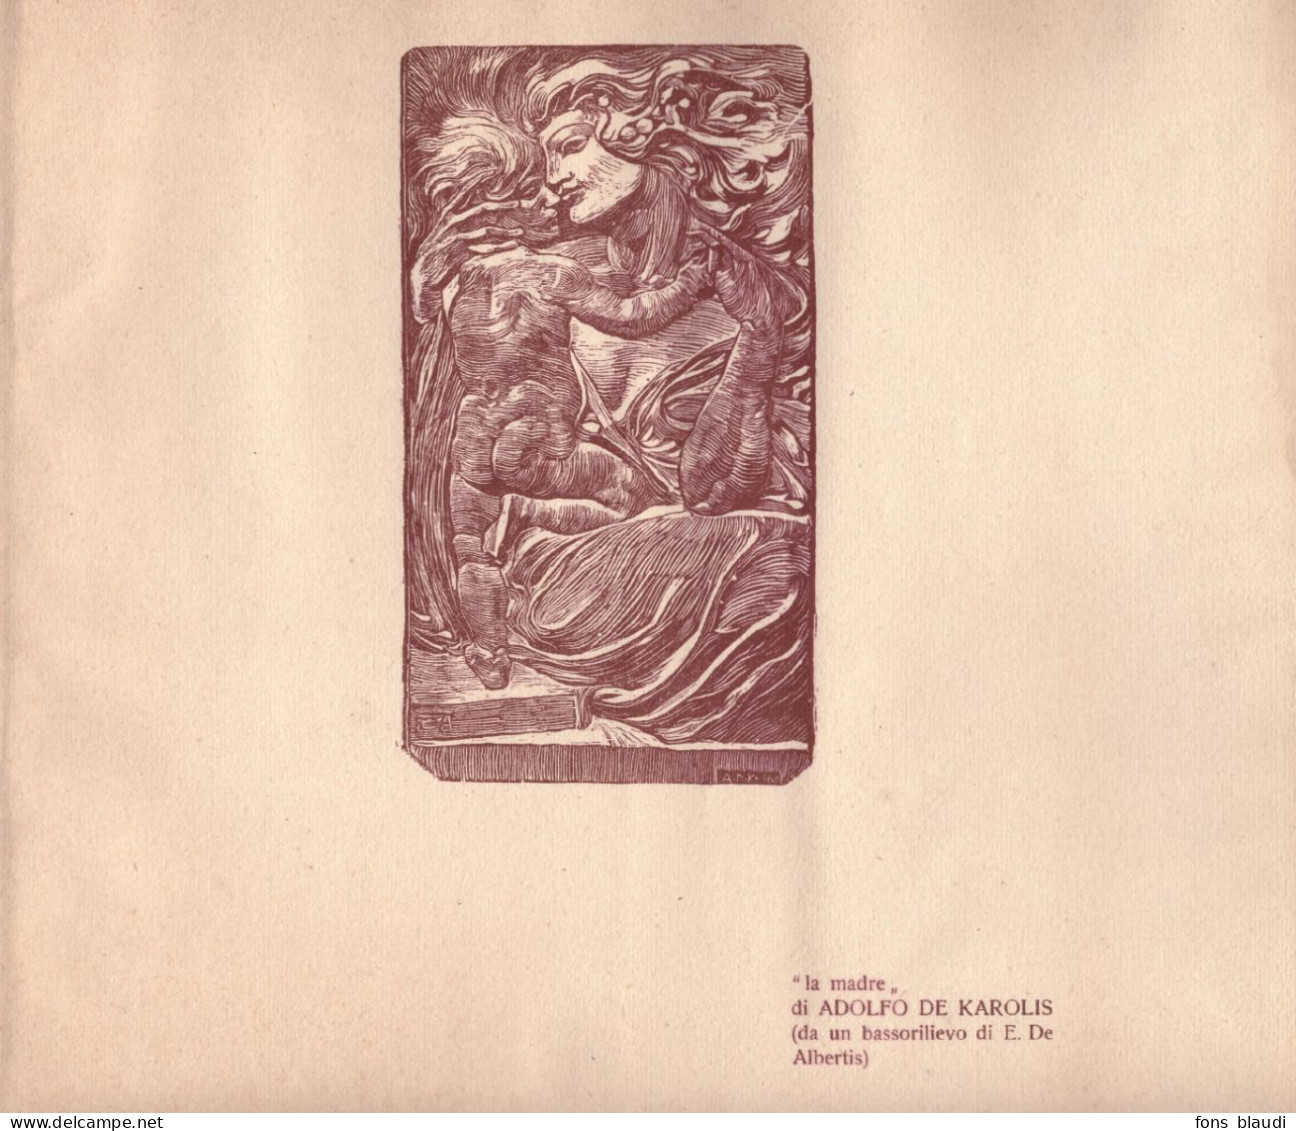 1912 - Xylographie Originale - Adolfo De Karolis (Montefiore Dell'Aso 1874 - Rome 1928) - La Madre - Prints & Engravings